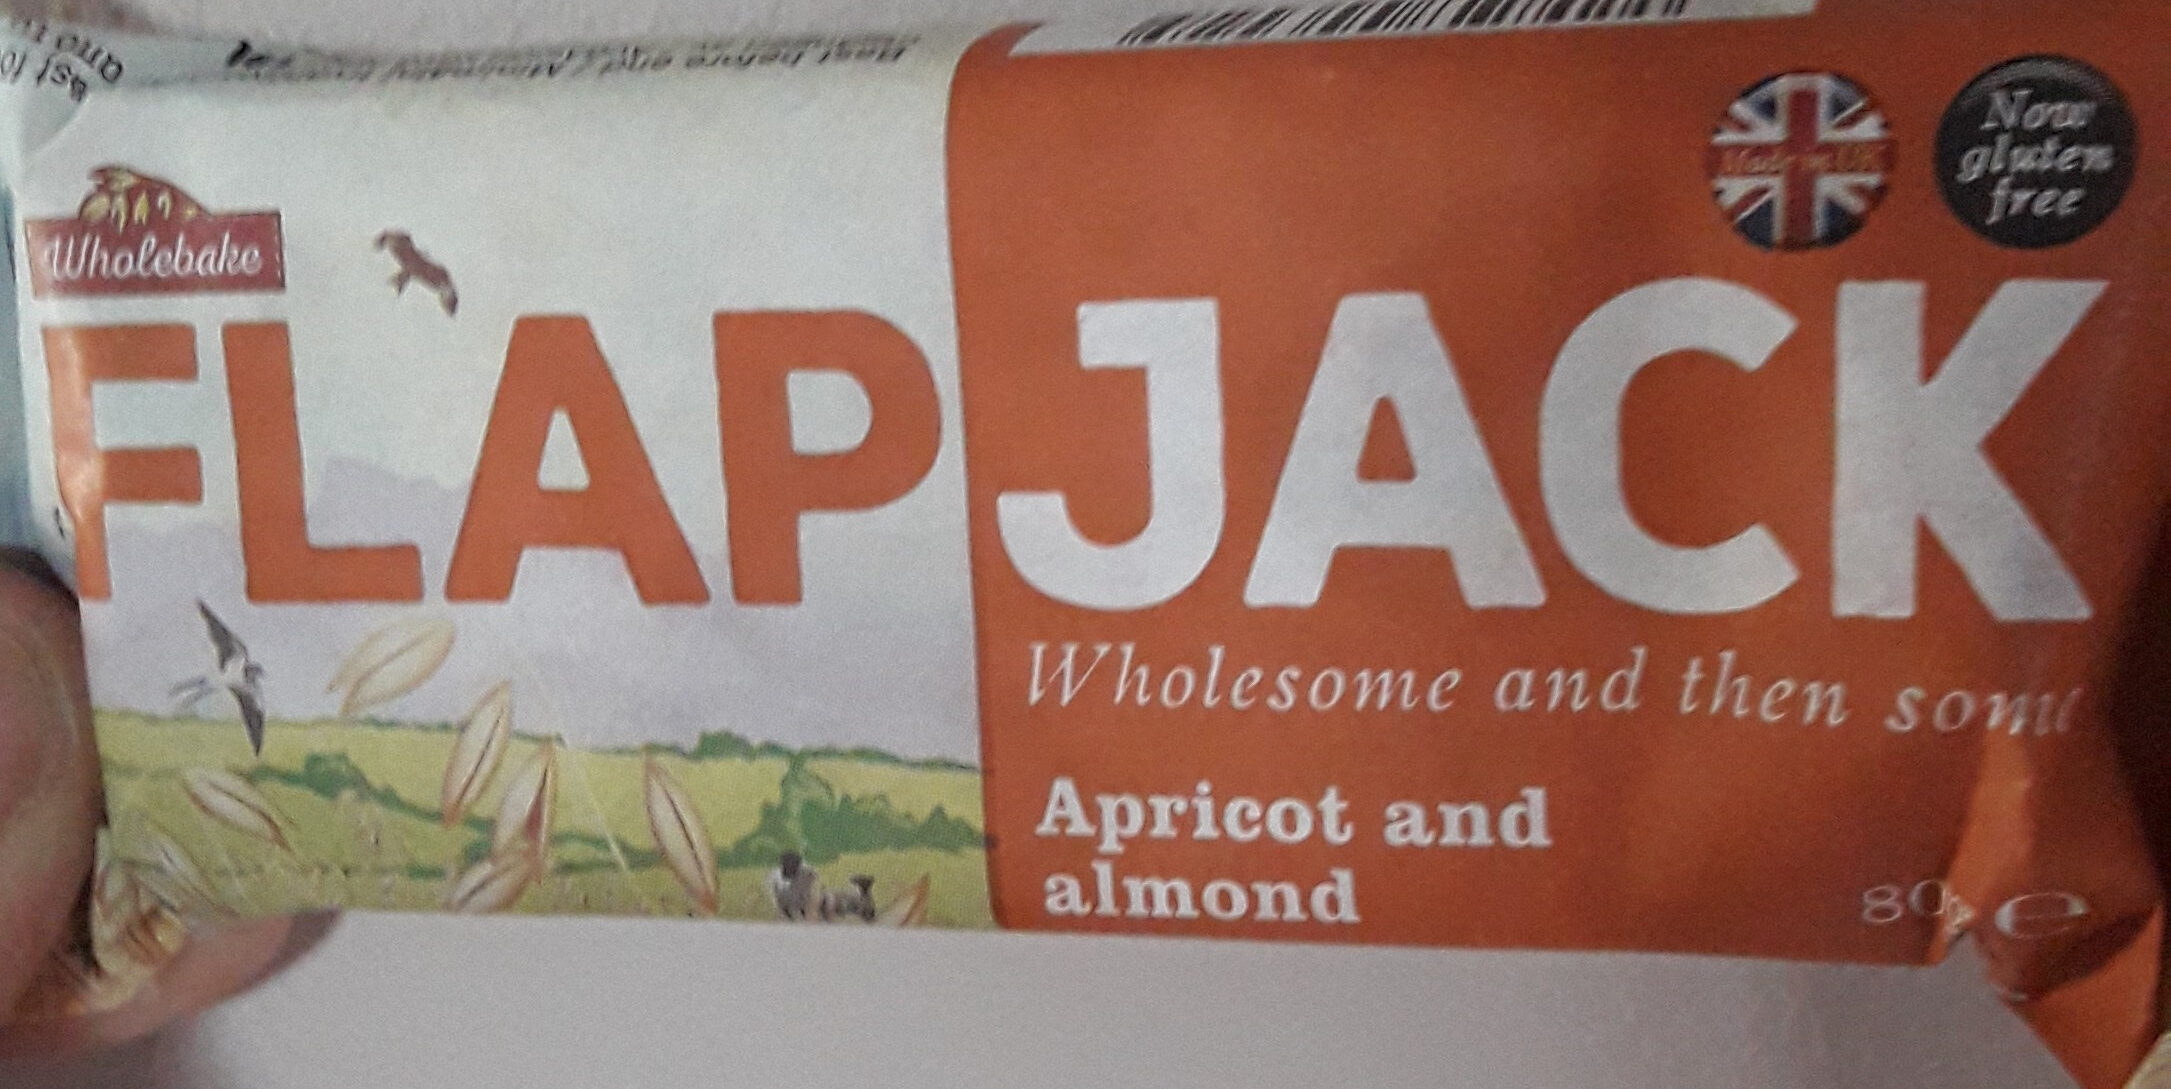 Flapjack abricot amande - Produit - en